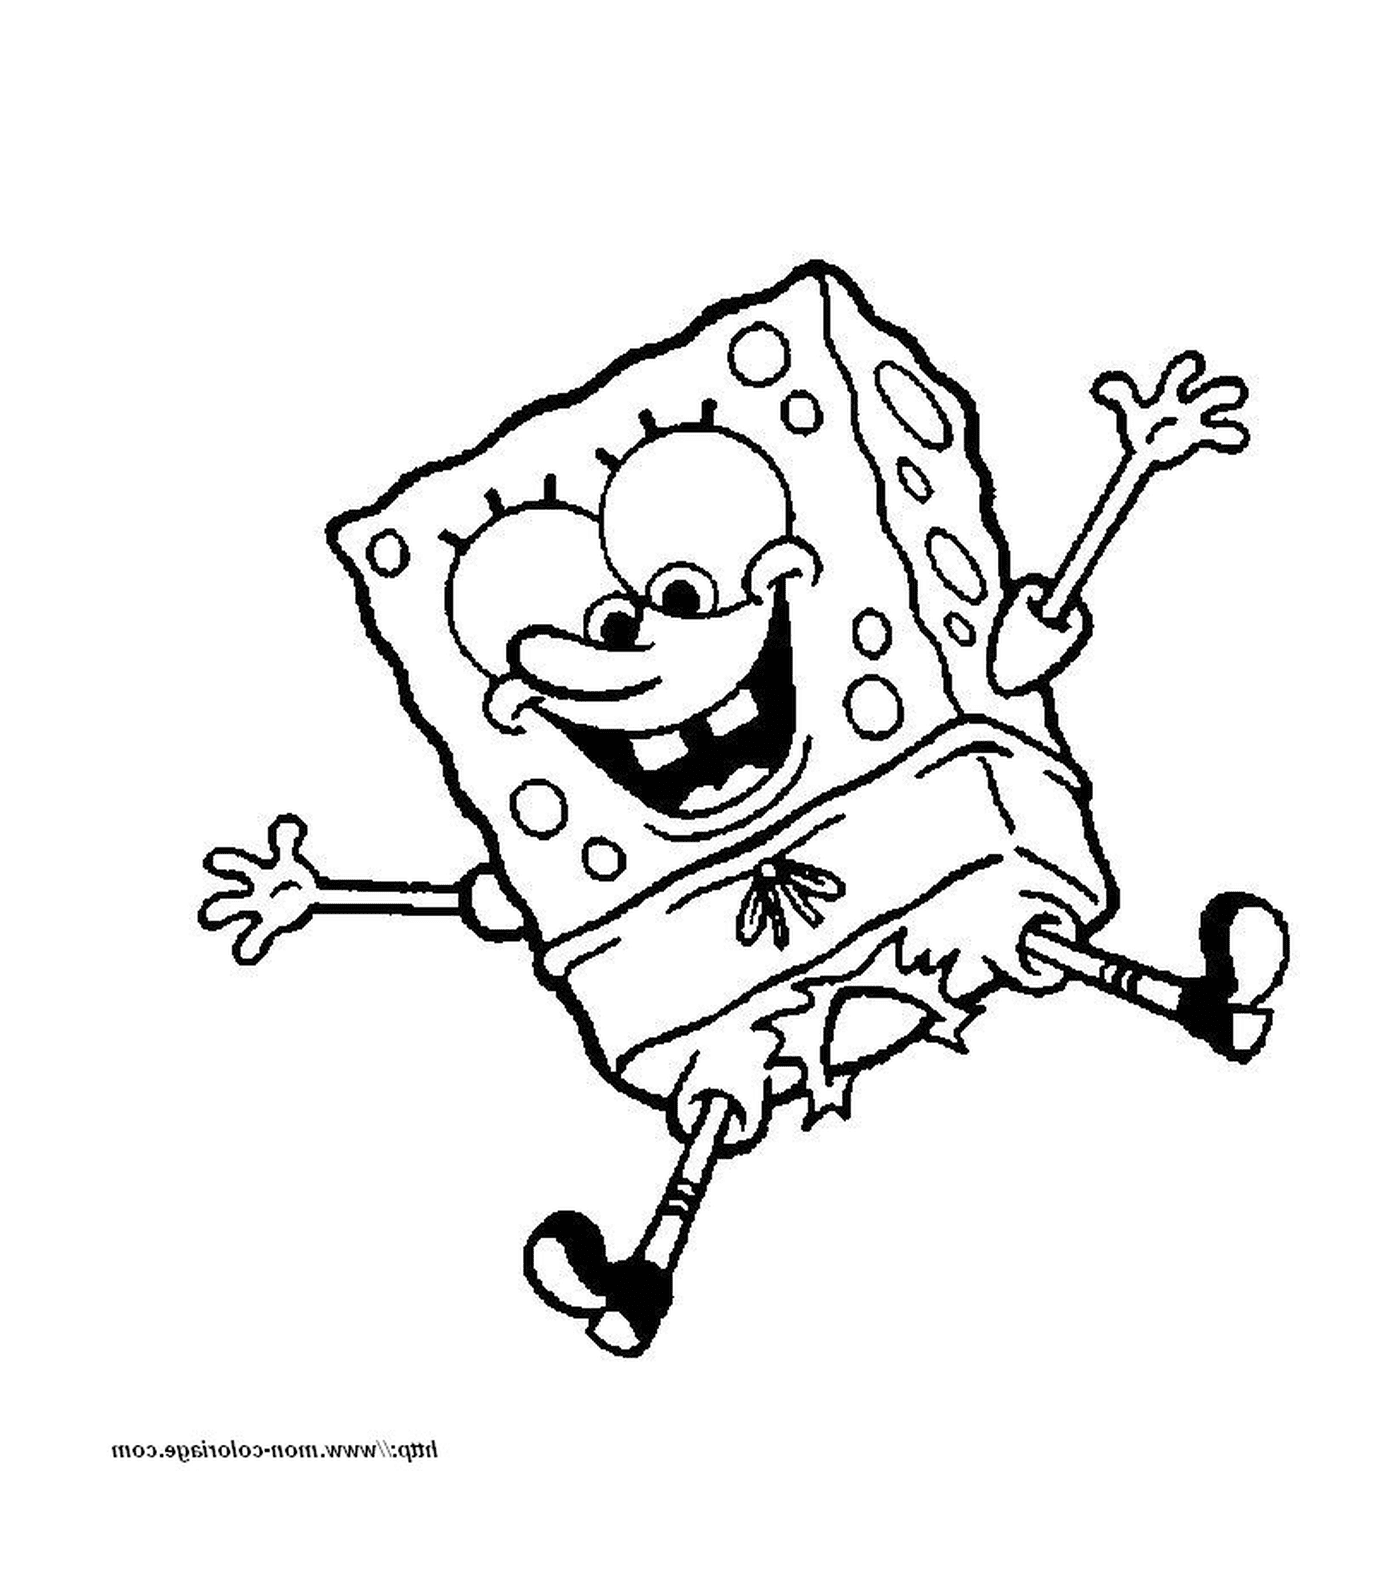  An image of Bob the Sponge 